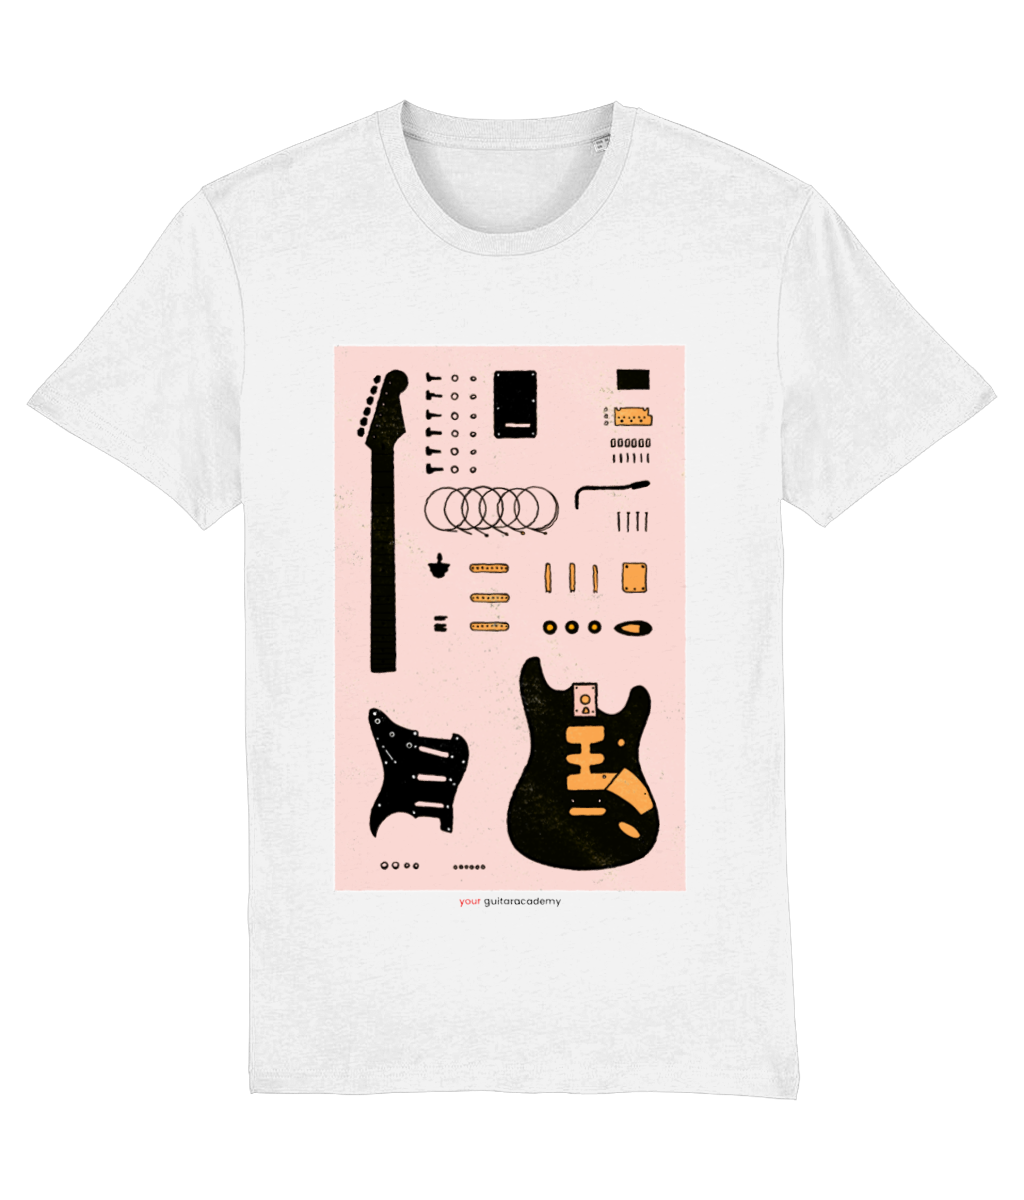 Guitar Elements T-Shirt